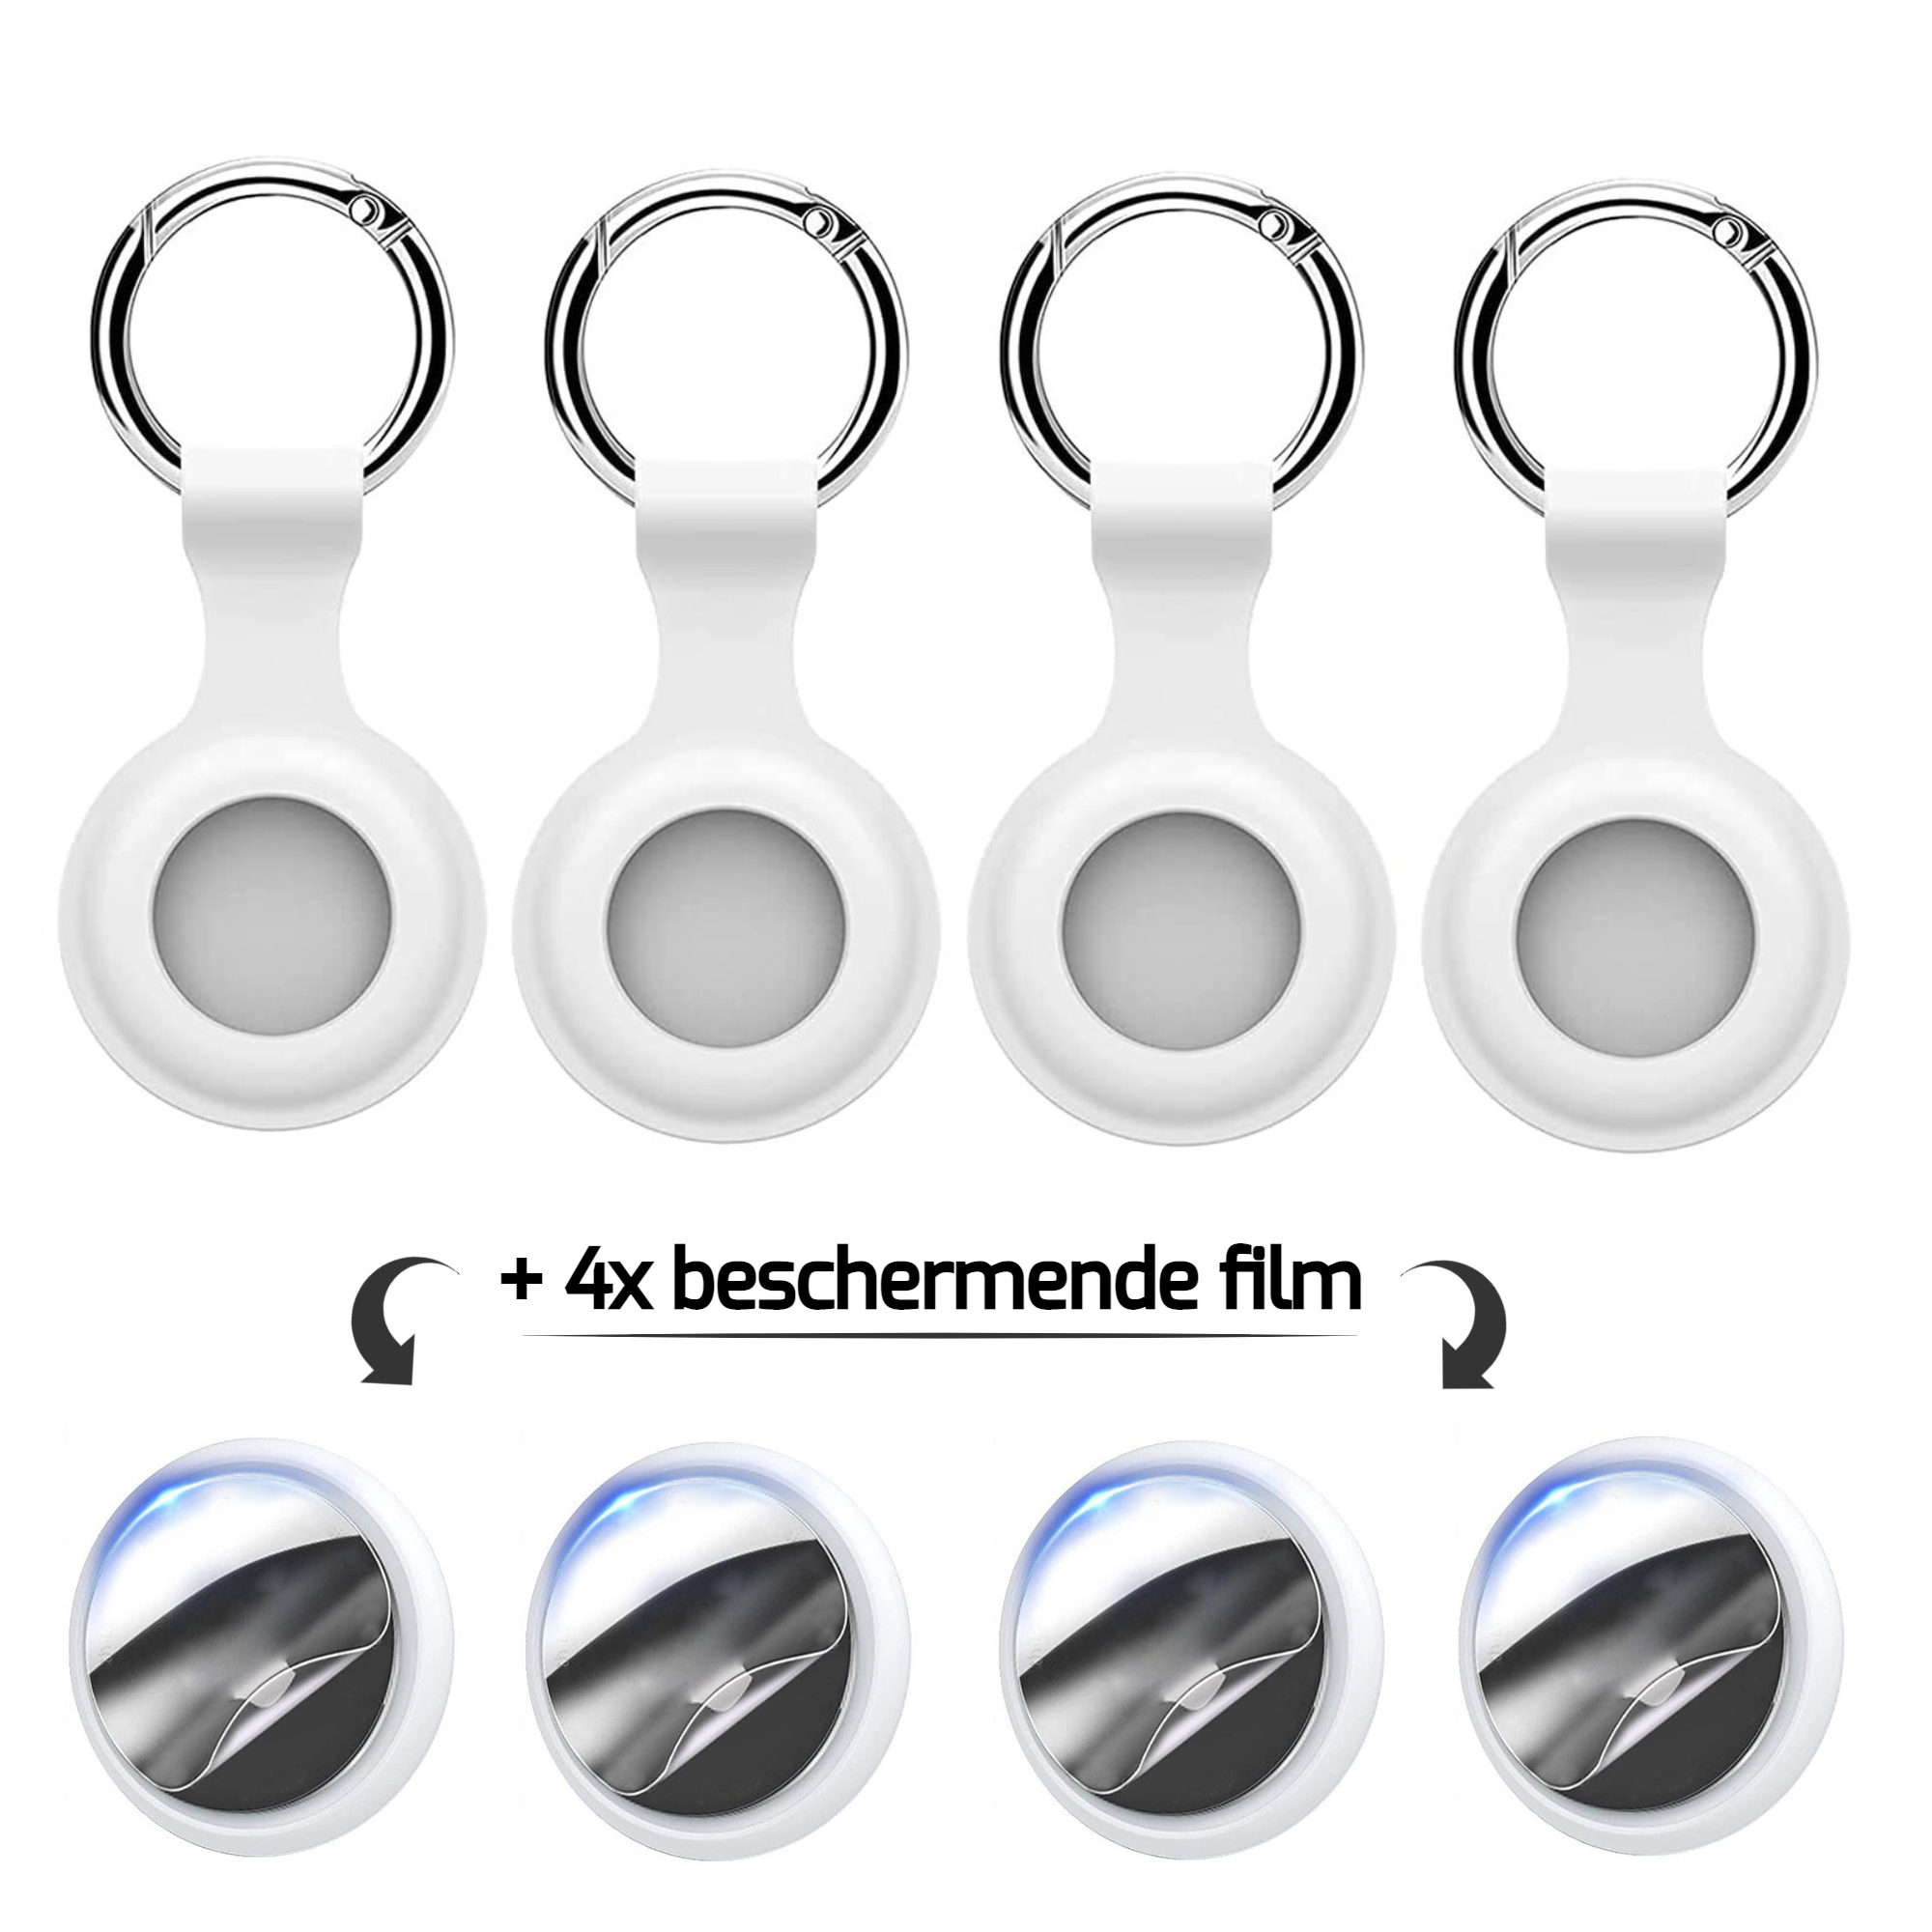 Sleutelhangers voor Apple Airtag (x4) + beschermende film (x4)